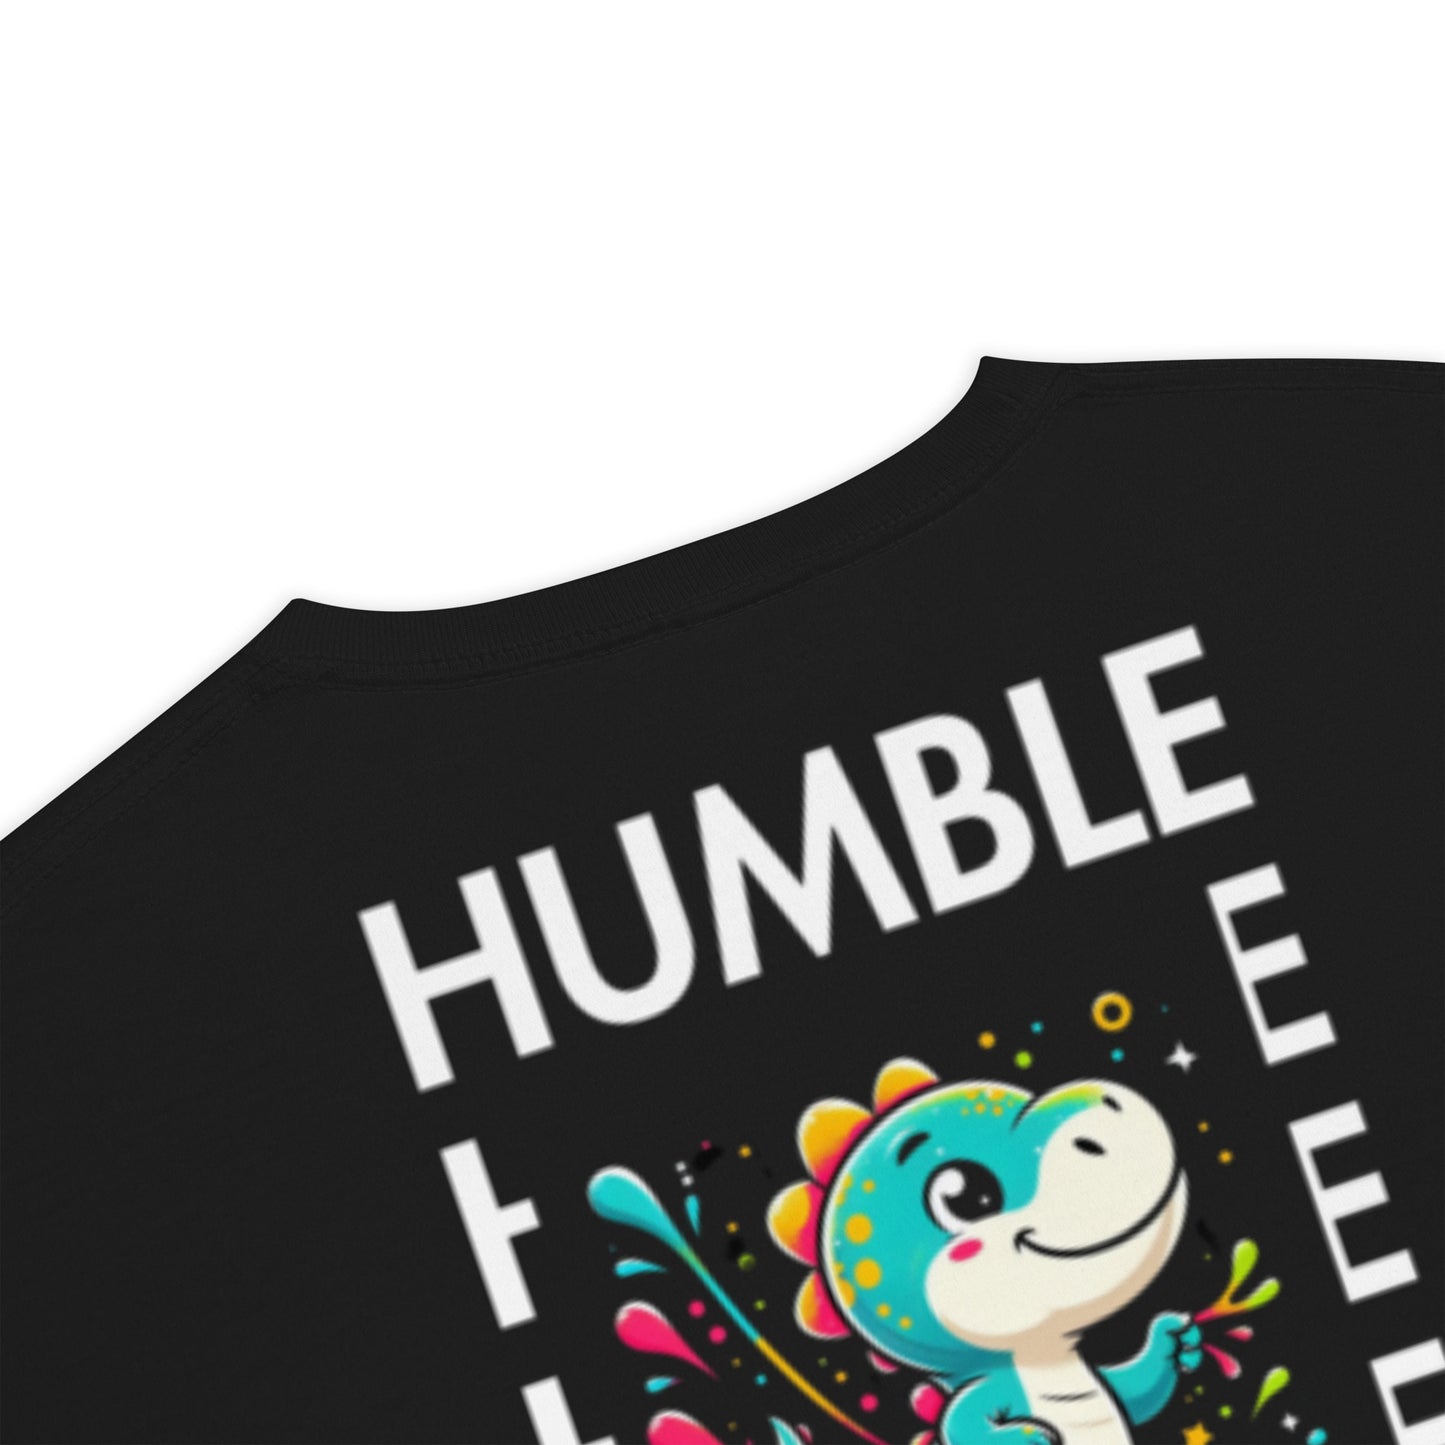 Humble Dino T-Shirt Black - ROSE Society